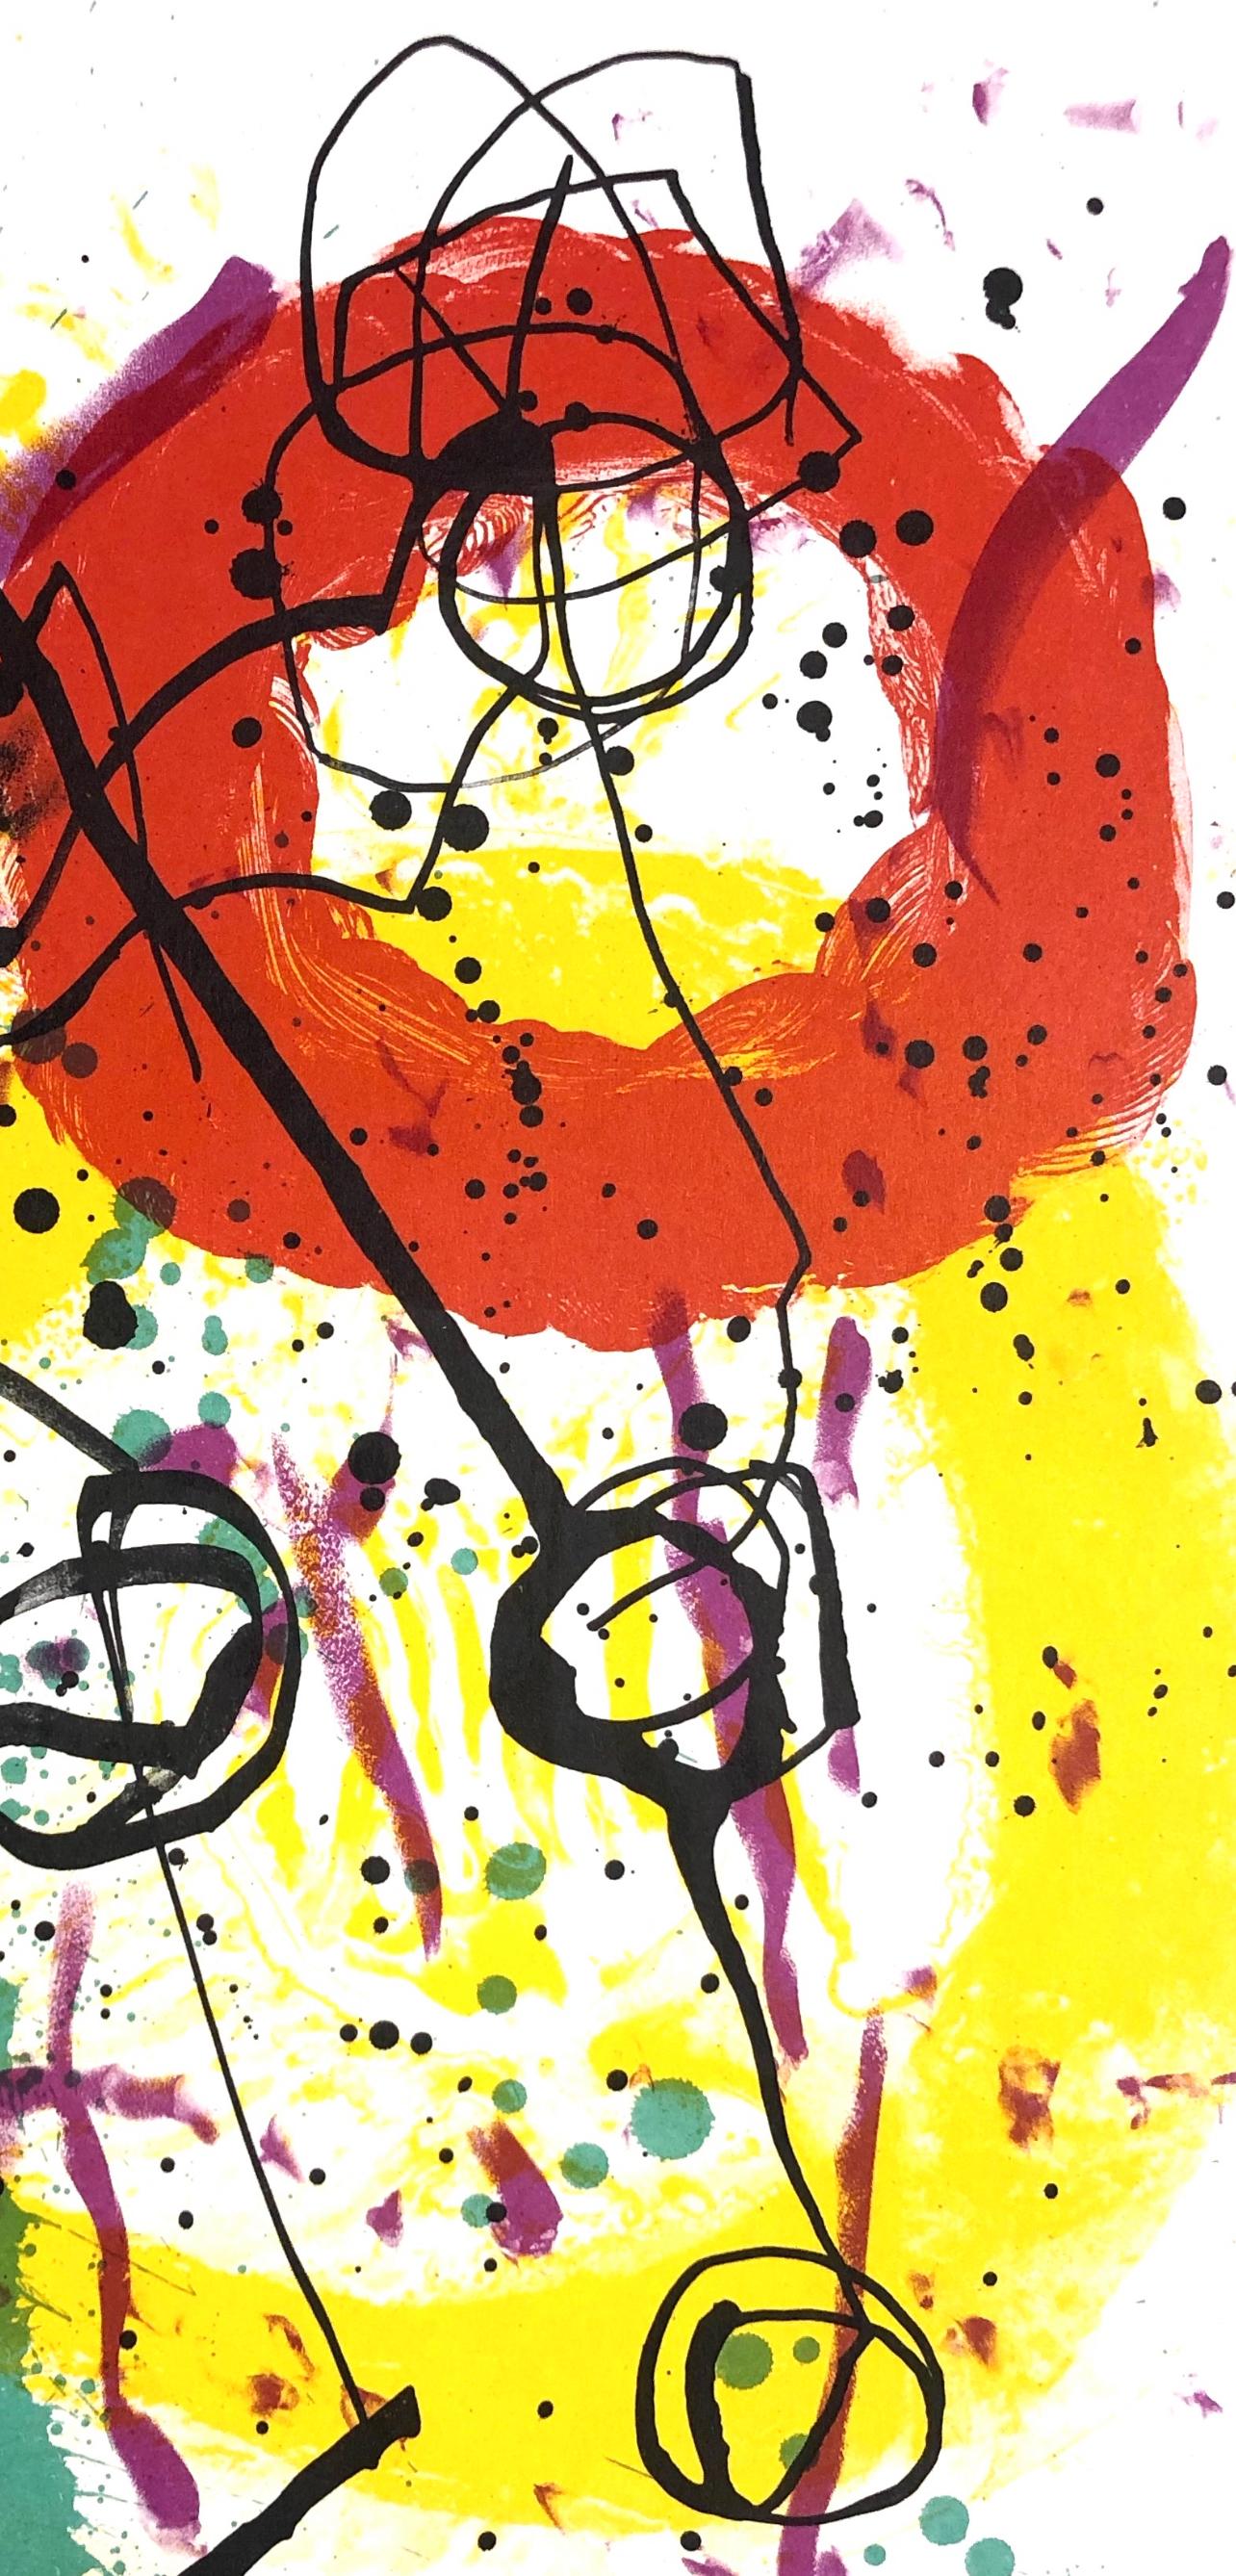 Miró, Composition (Mourlot 206; Cramer 67), XXe Siècle (after) - Print by Joan Miró